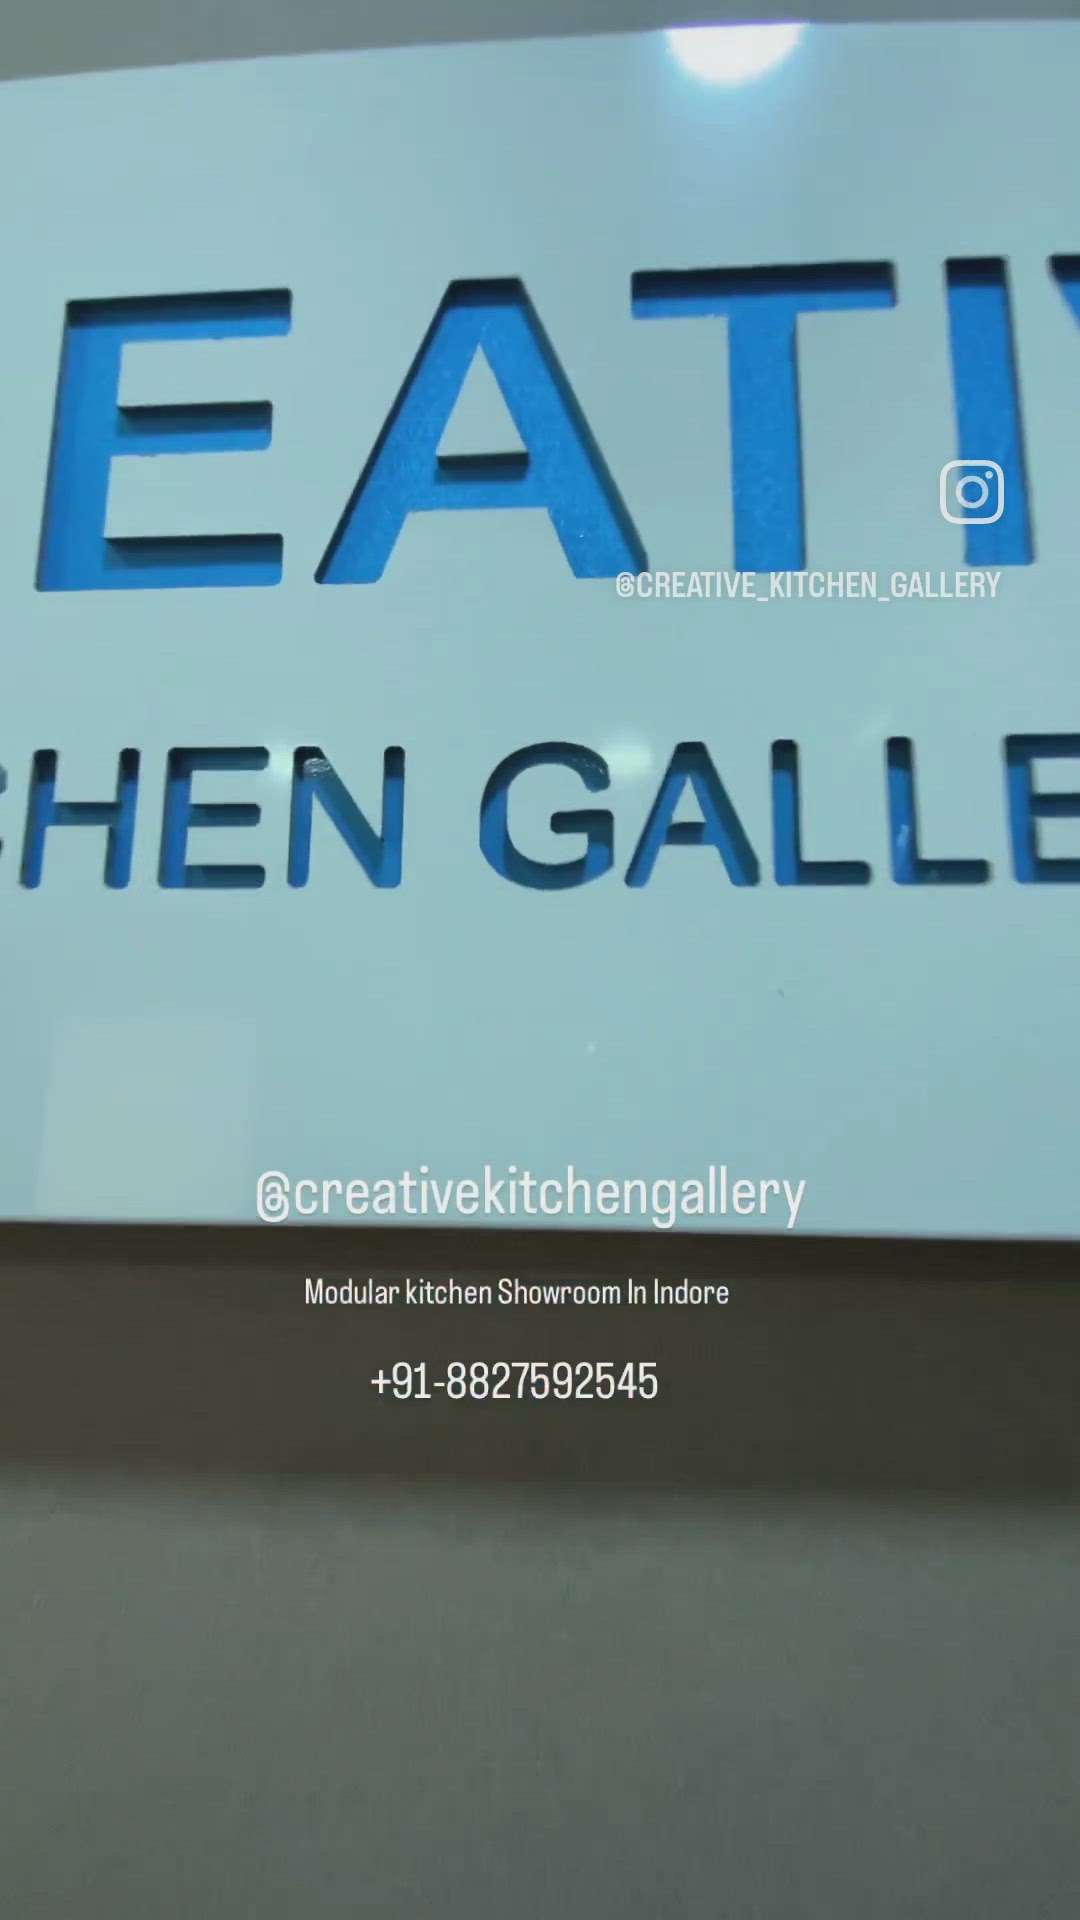 Welcome to 
CREATIVE KITCHEN GALLERY - MODULAR KITCHEN
Call now +91-88275 92545
And fill customer info form
Follow us- 
Google :-  https://maps.app.goo.gl/vnqWbNo8UemdMMrm7

YouTube :- https://youtu.be/XBV9qkm_N6U

Instagram- https://www.instagram.com/creative_kitchen_gallery/

Facebook- https://www.facebook.com/creativekitchengallery2016/

🙂          Link to WhatsApp  https://wa.me/918827592545